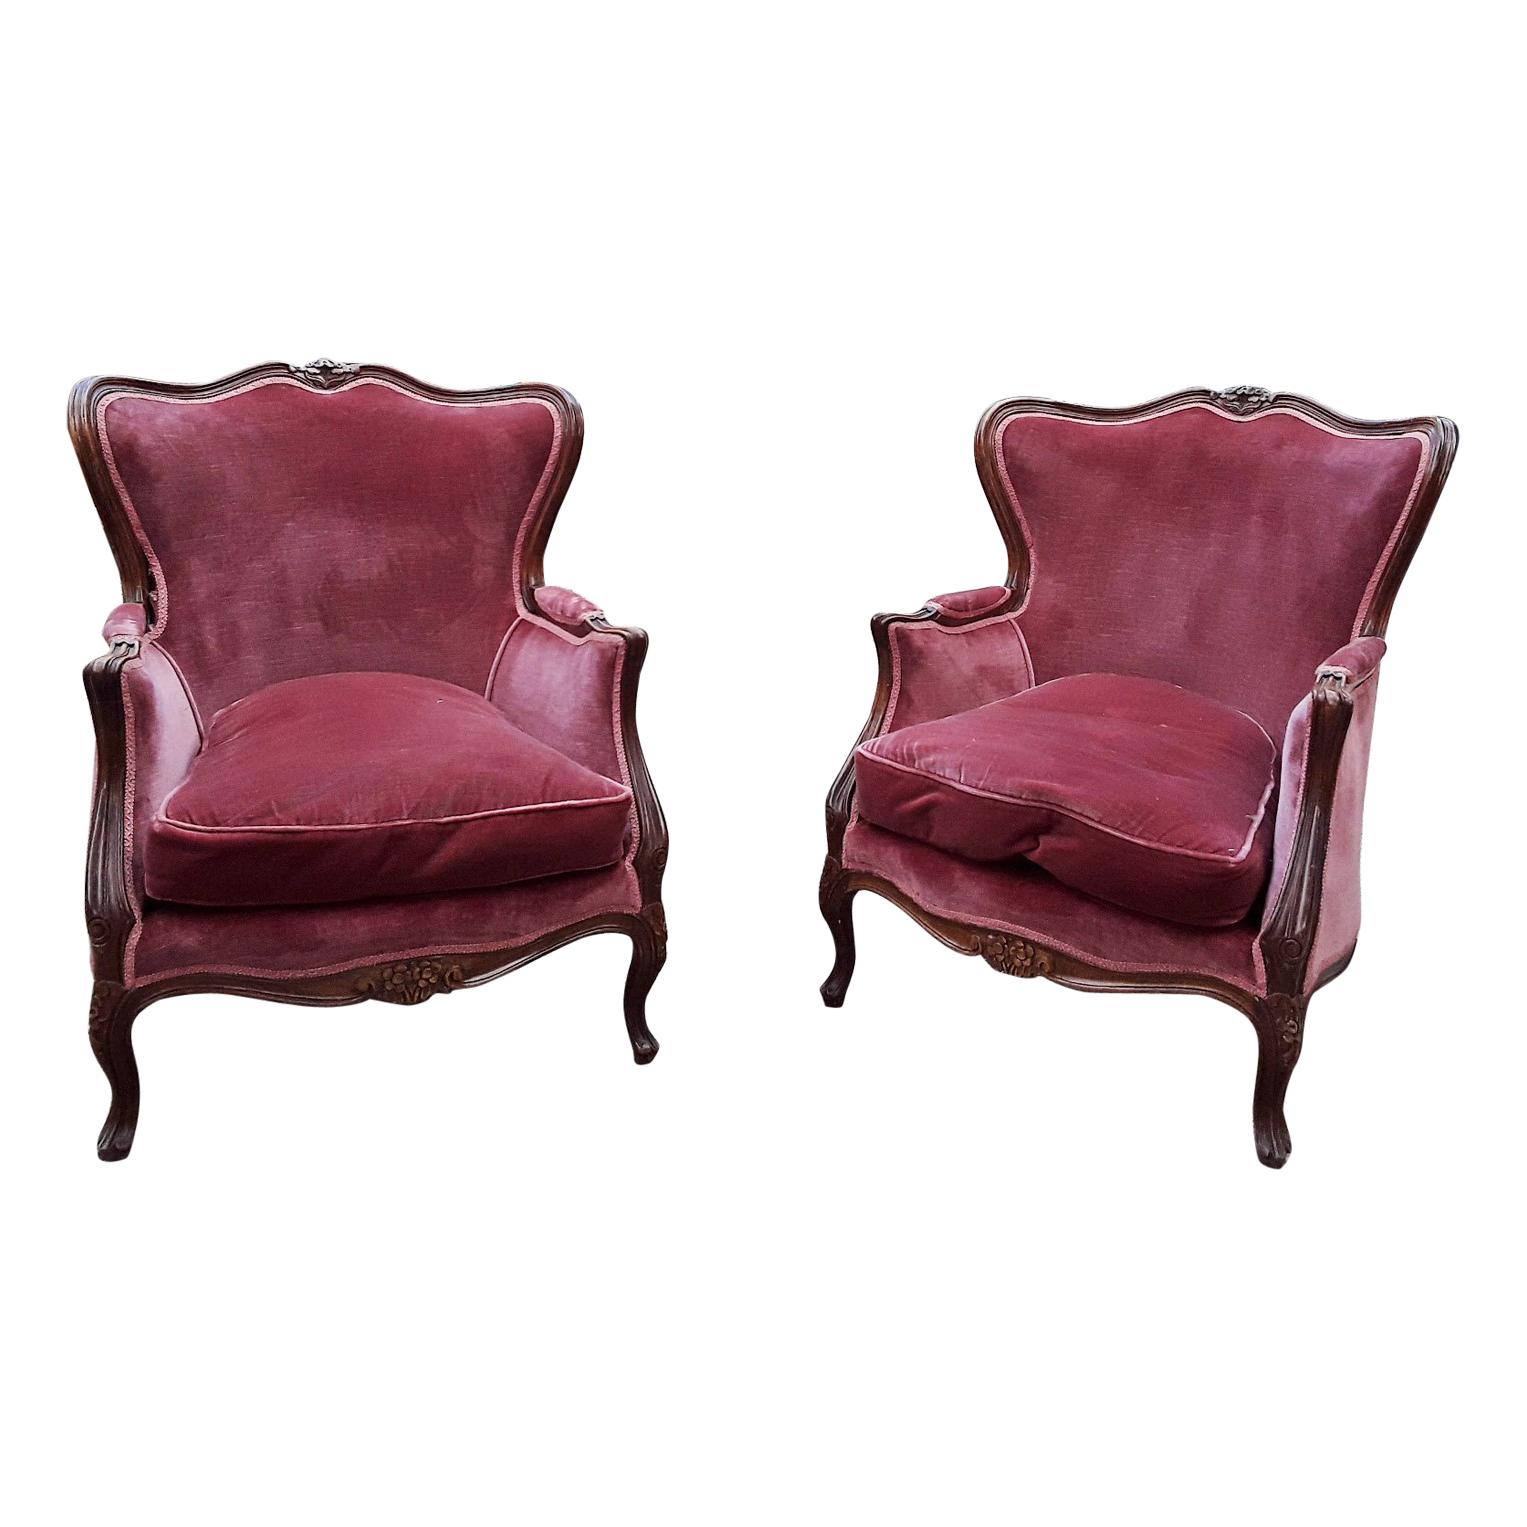 20th Century Italian Walnut Armchairs with Cherry Colour Original Velvet Fabric